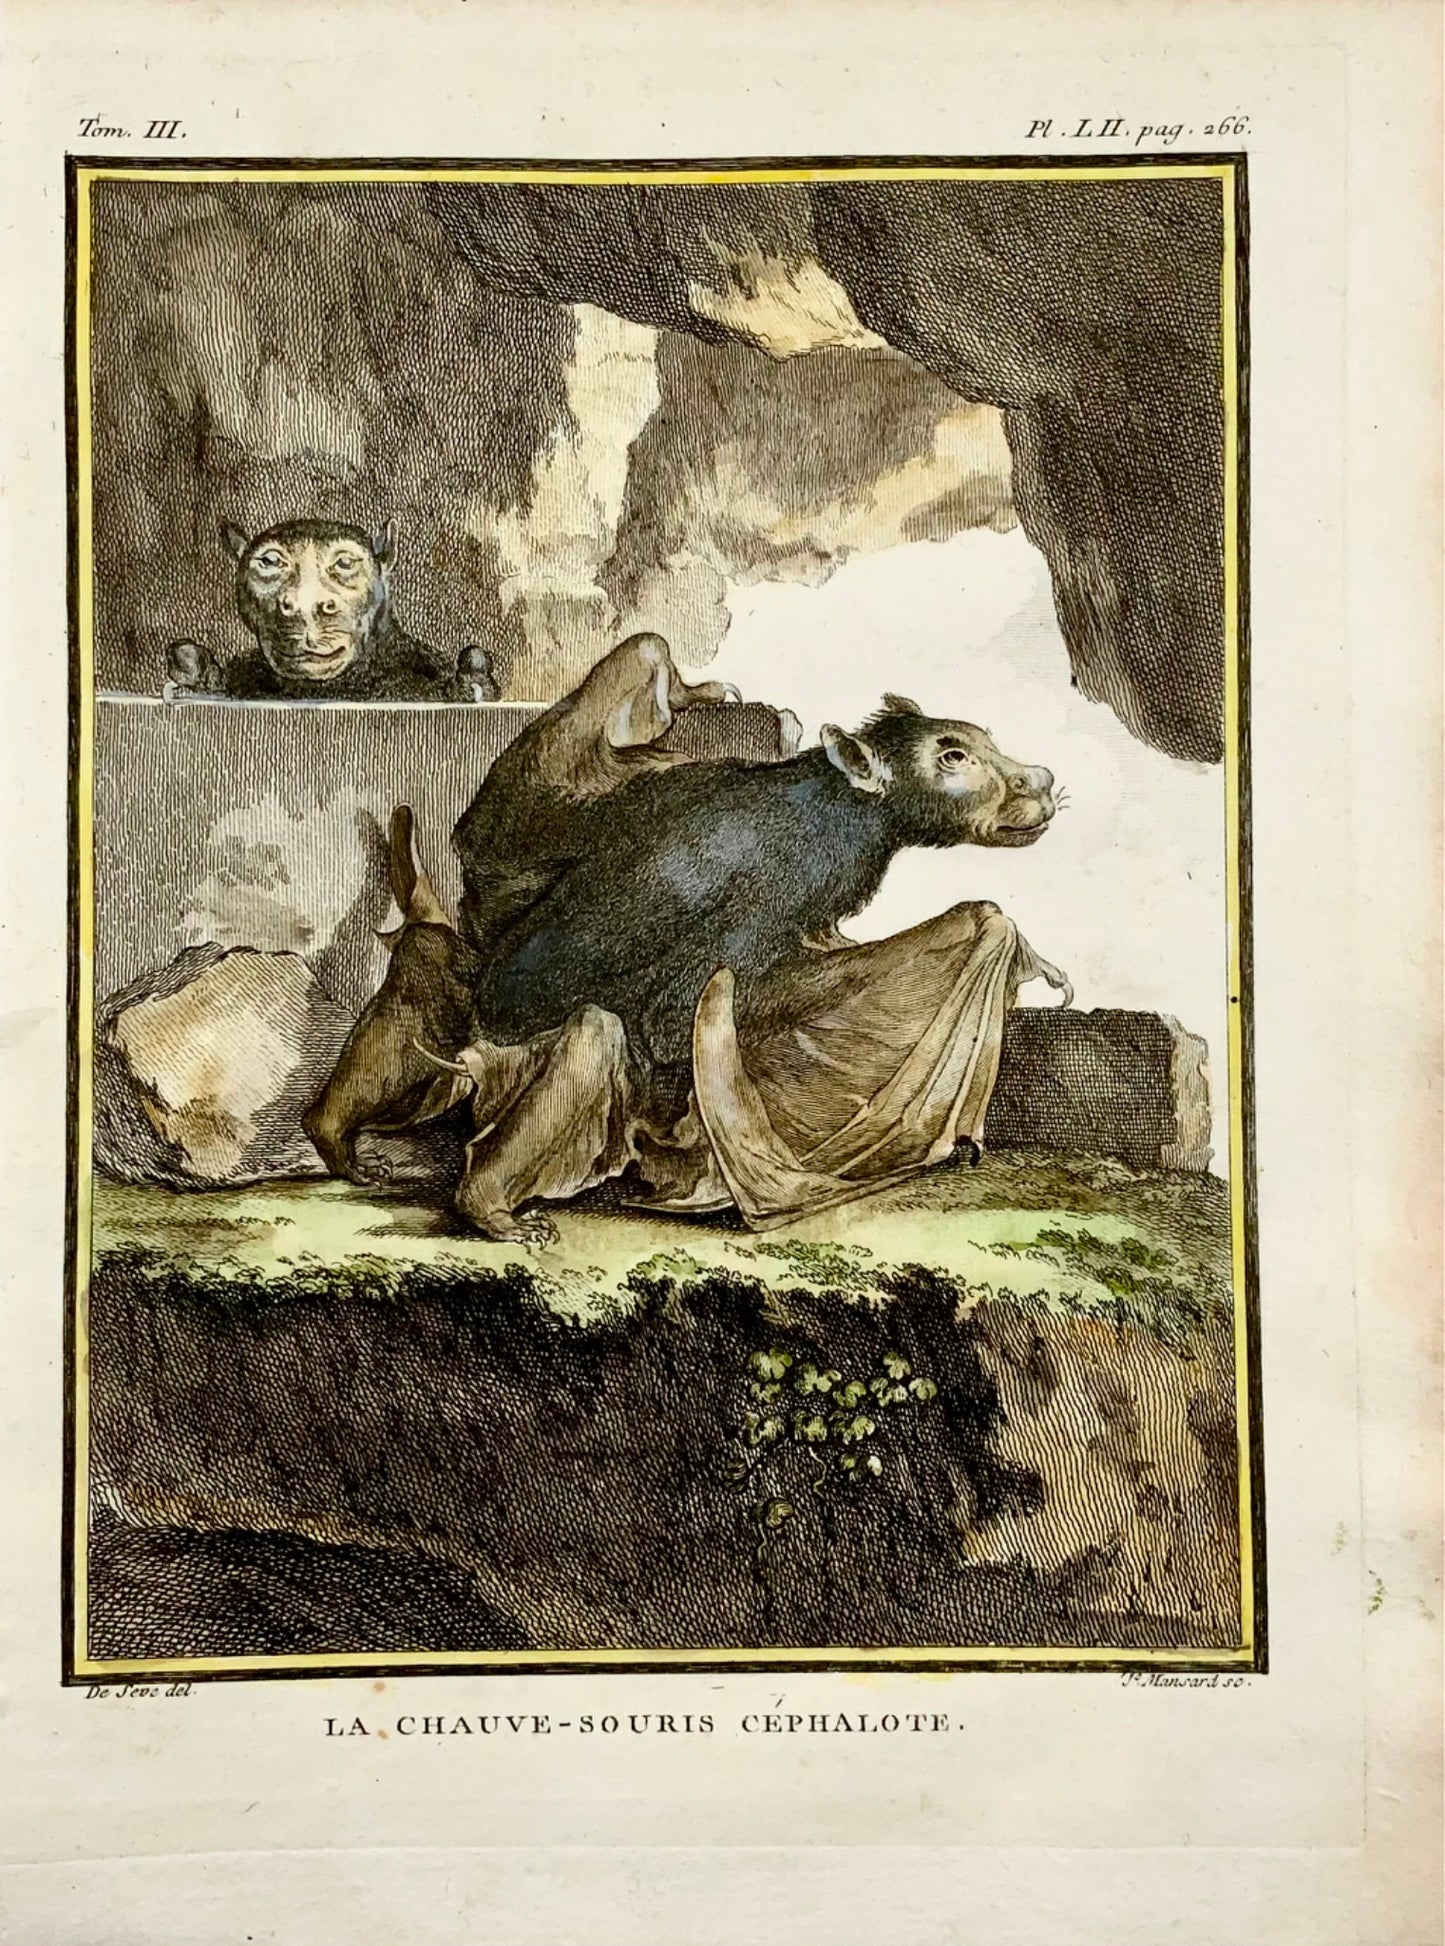 1766 De Seve - BAT Cephalote - large QUARTO edition hand colored engraving - Mammals